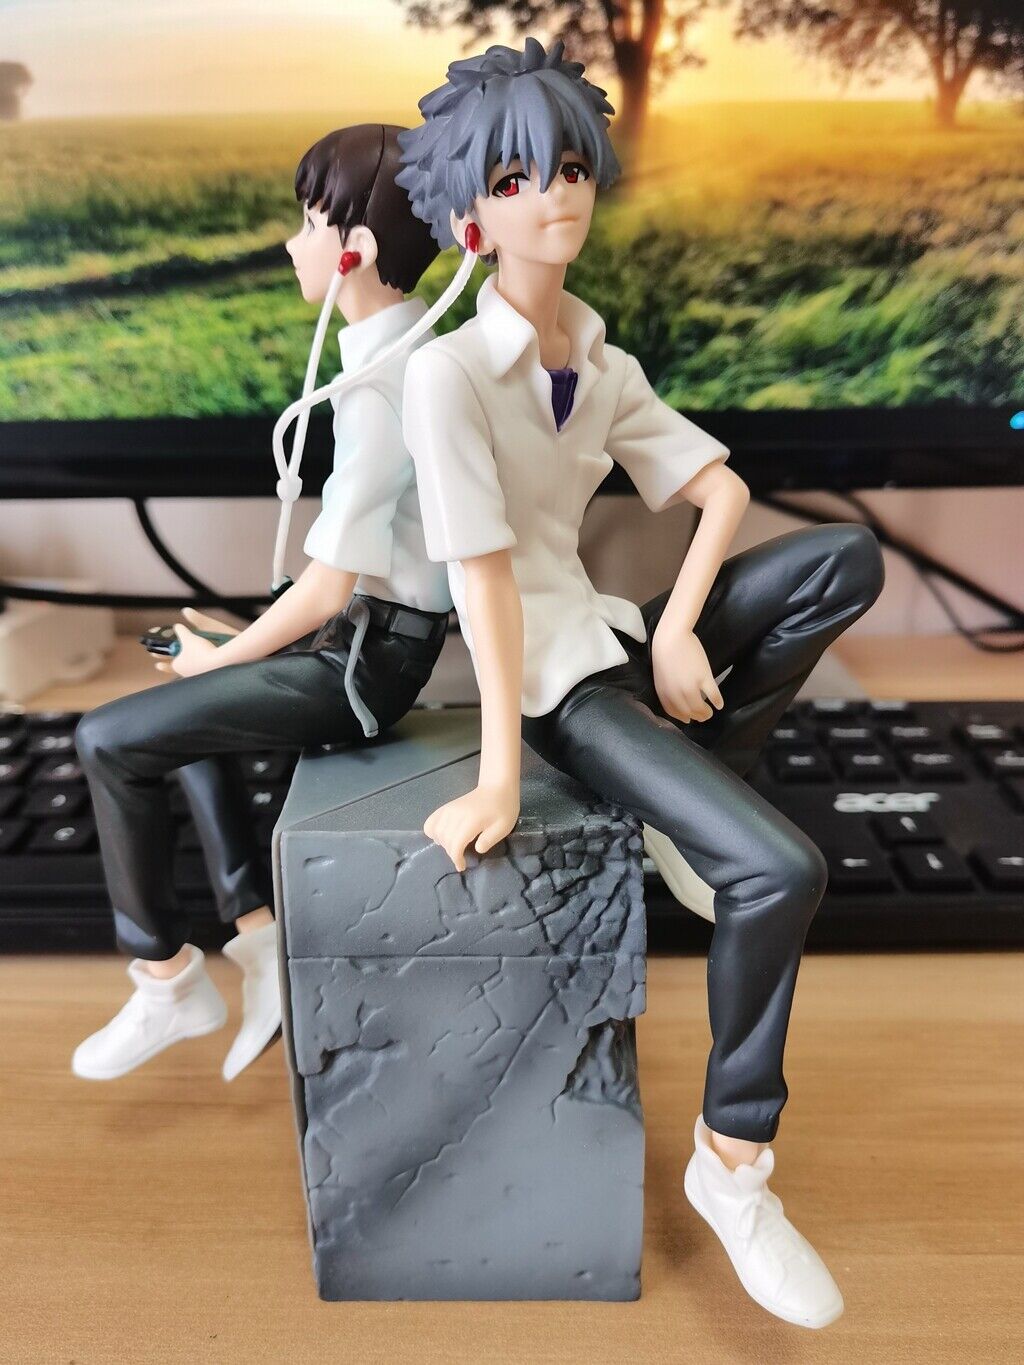 2pcs/set Anime Nagisa Kaworu & Ikari Shinji PVC Figure Statue New No Box 18cm